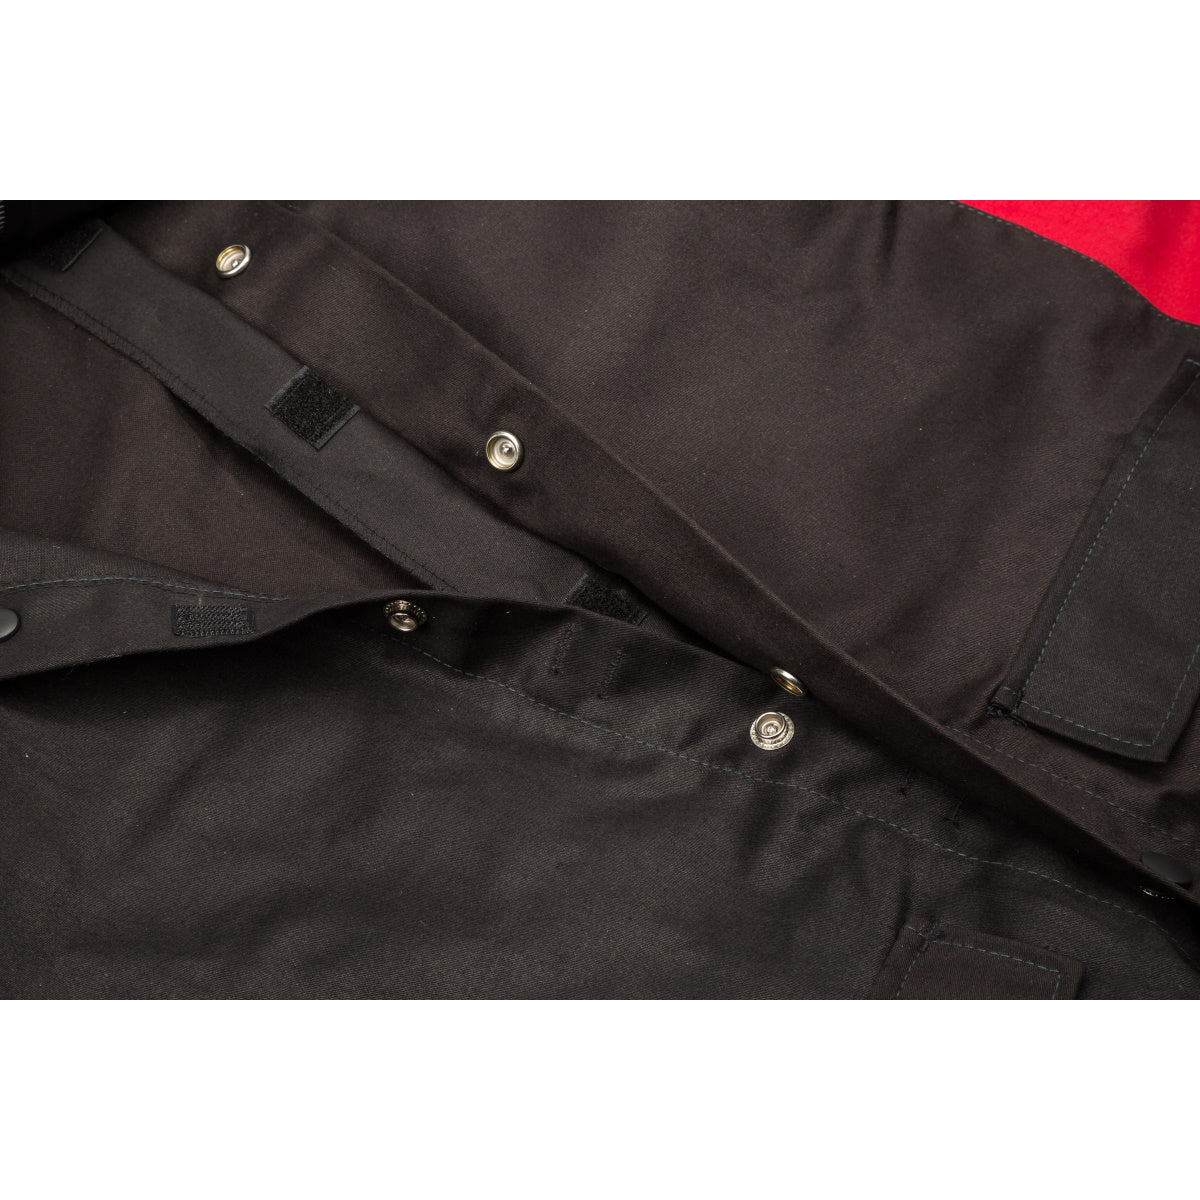 Lincoln Shadow Split Leather Sleeved Welding Jacket (K2986)